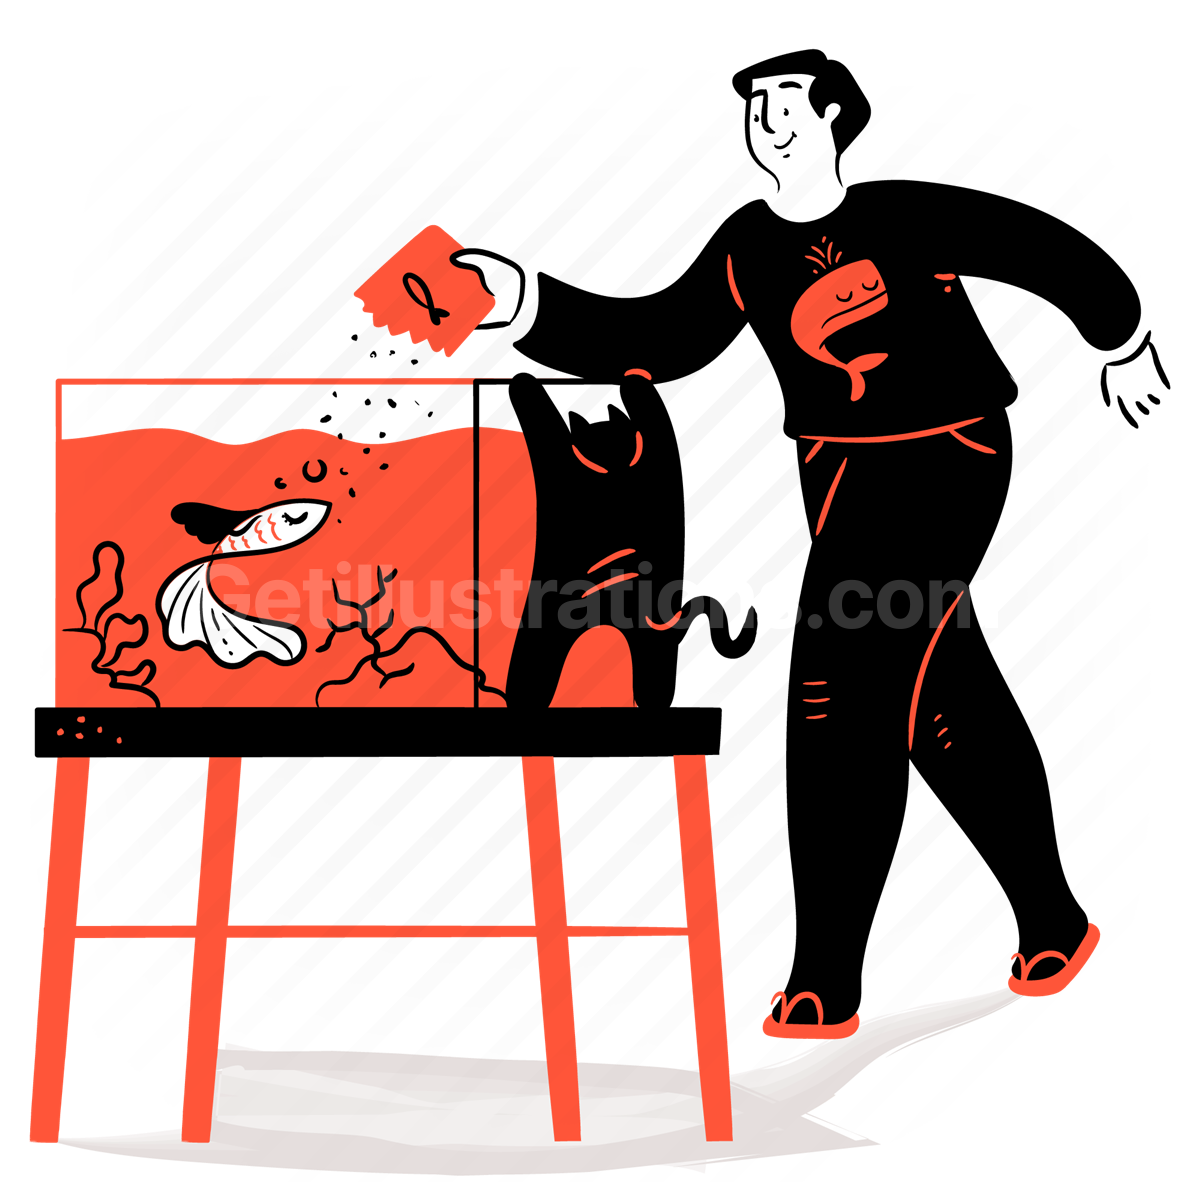 Animals and pets illustration